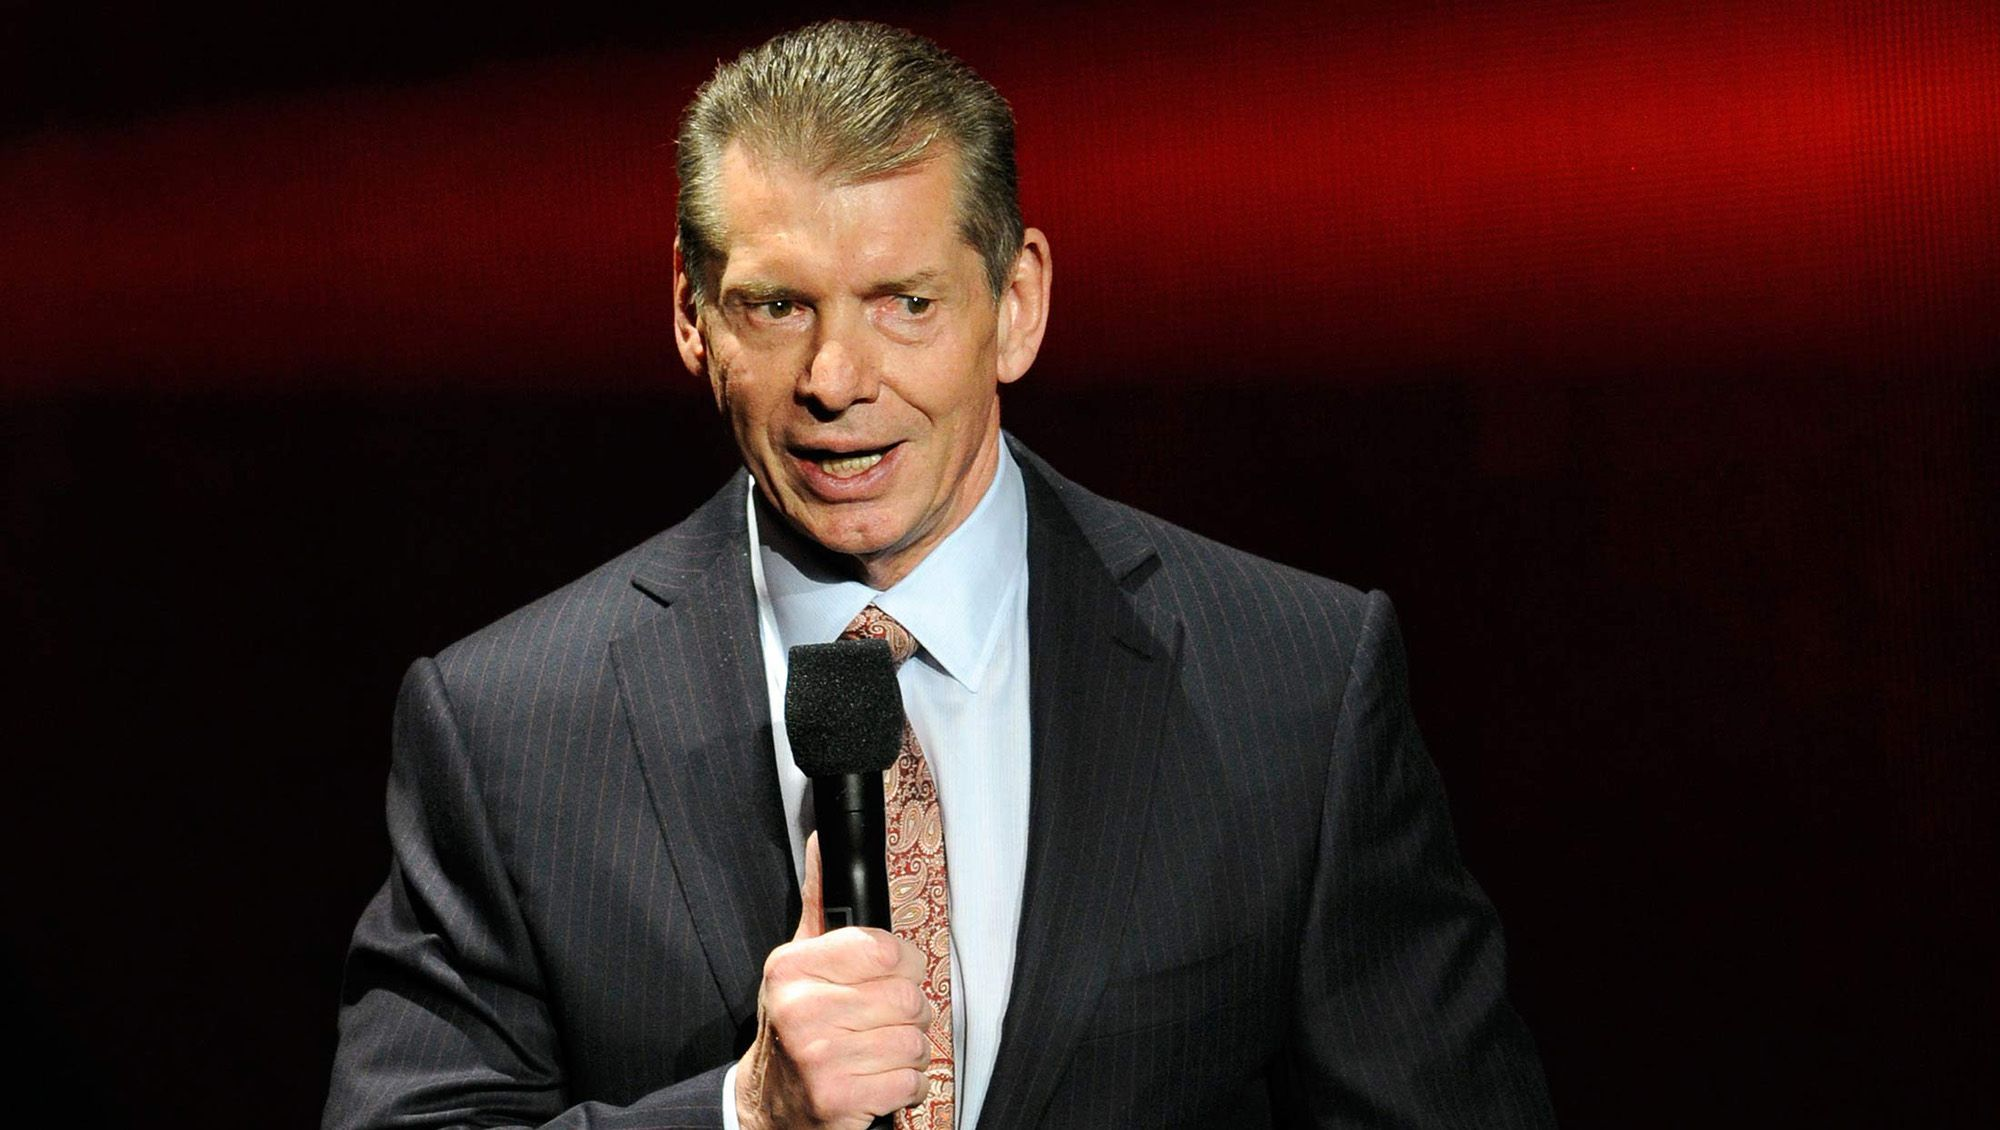 Wrestling boss Vince McMahon retires from WWE amid hush money probe